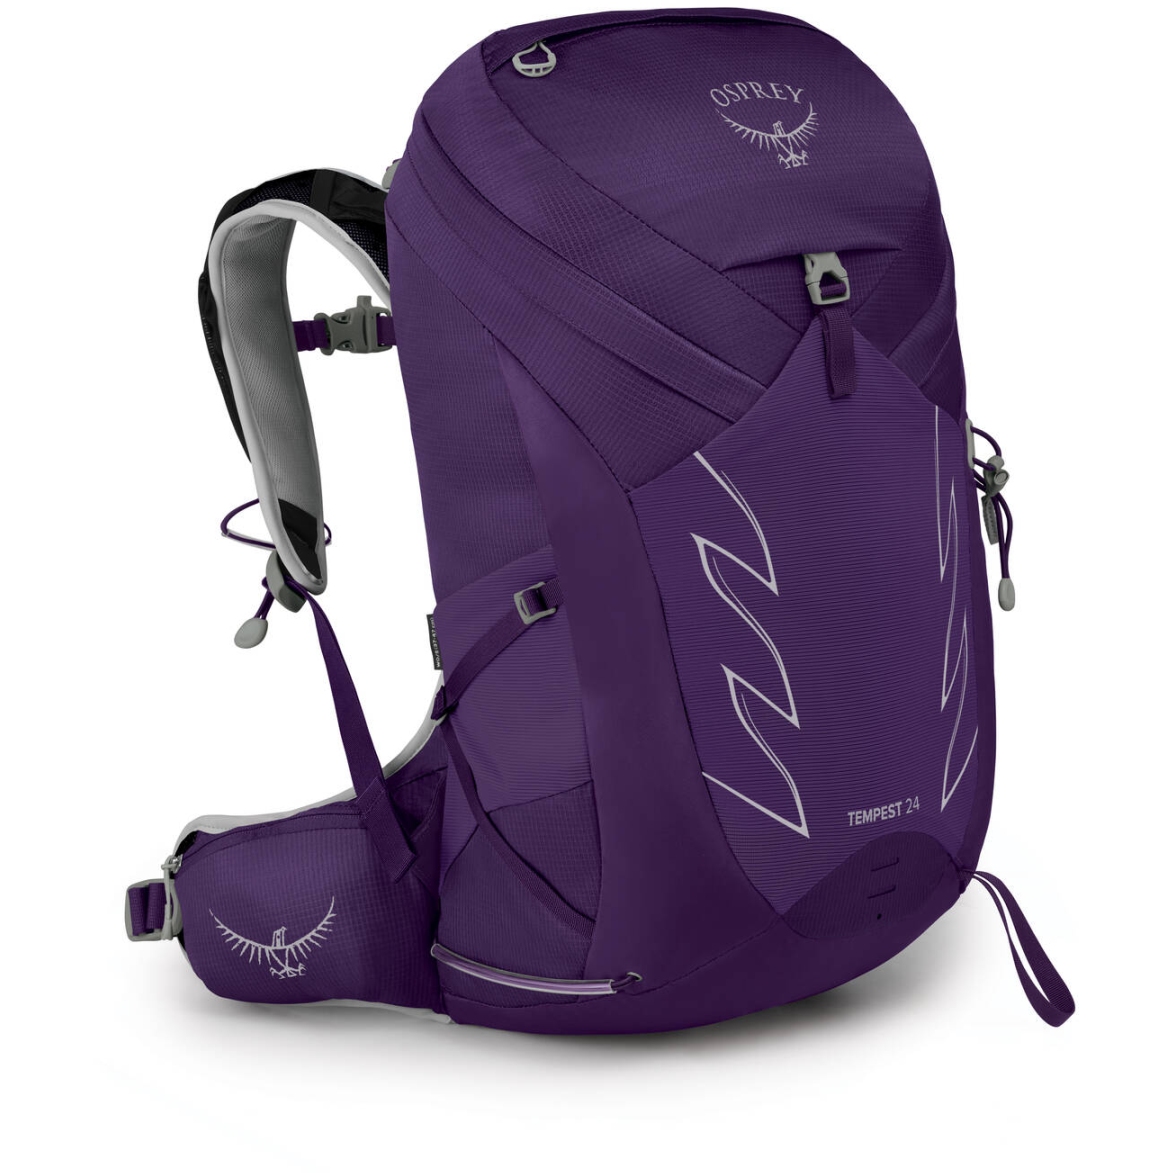 Productfoto van Osprey Tempest 24 Dames Rugzak - Violac Purple